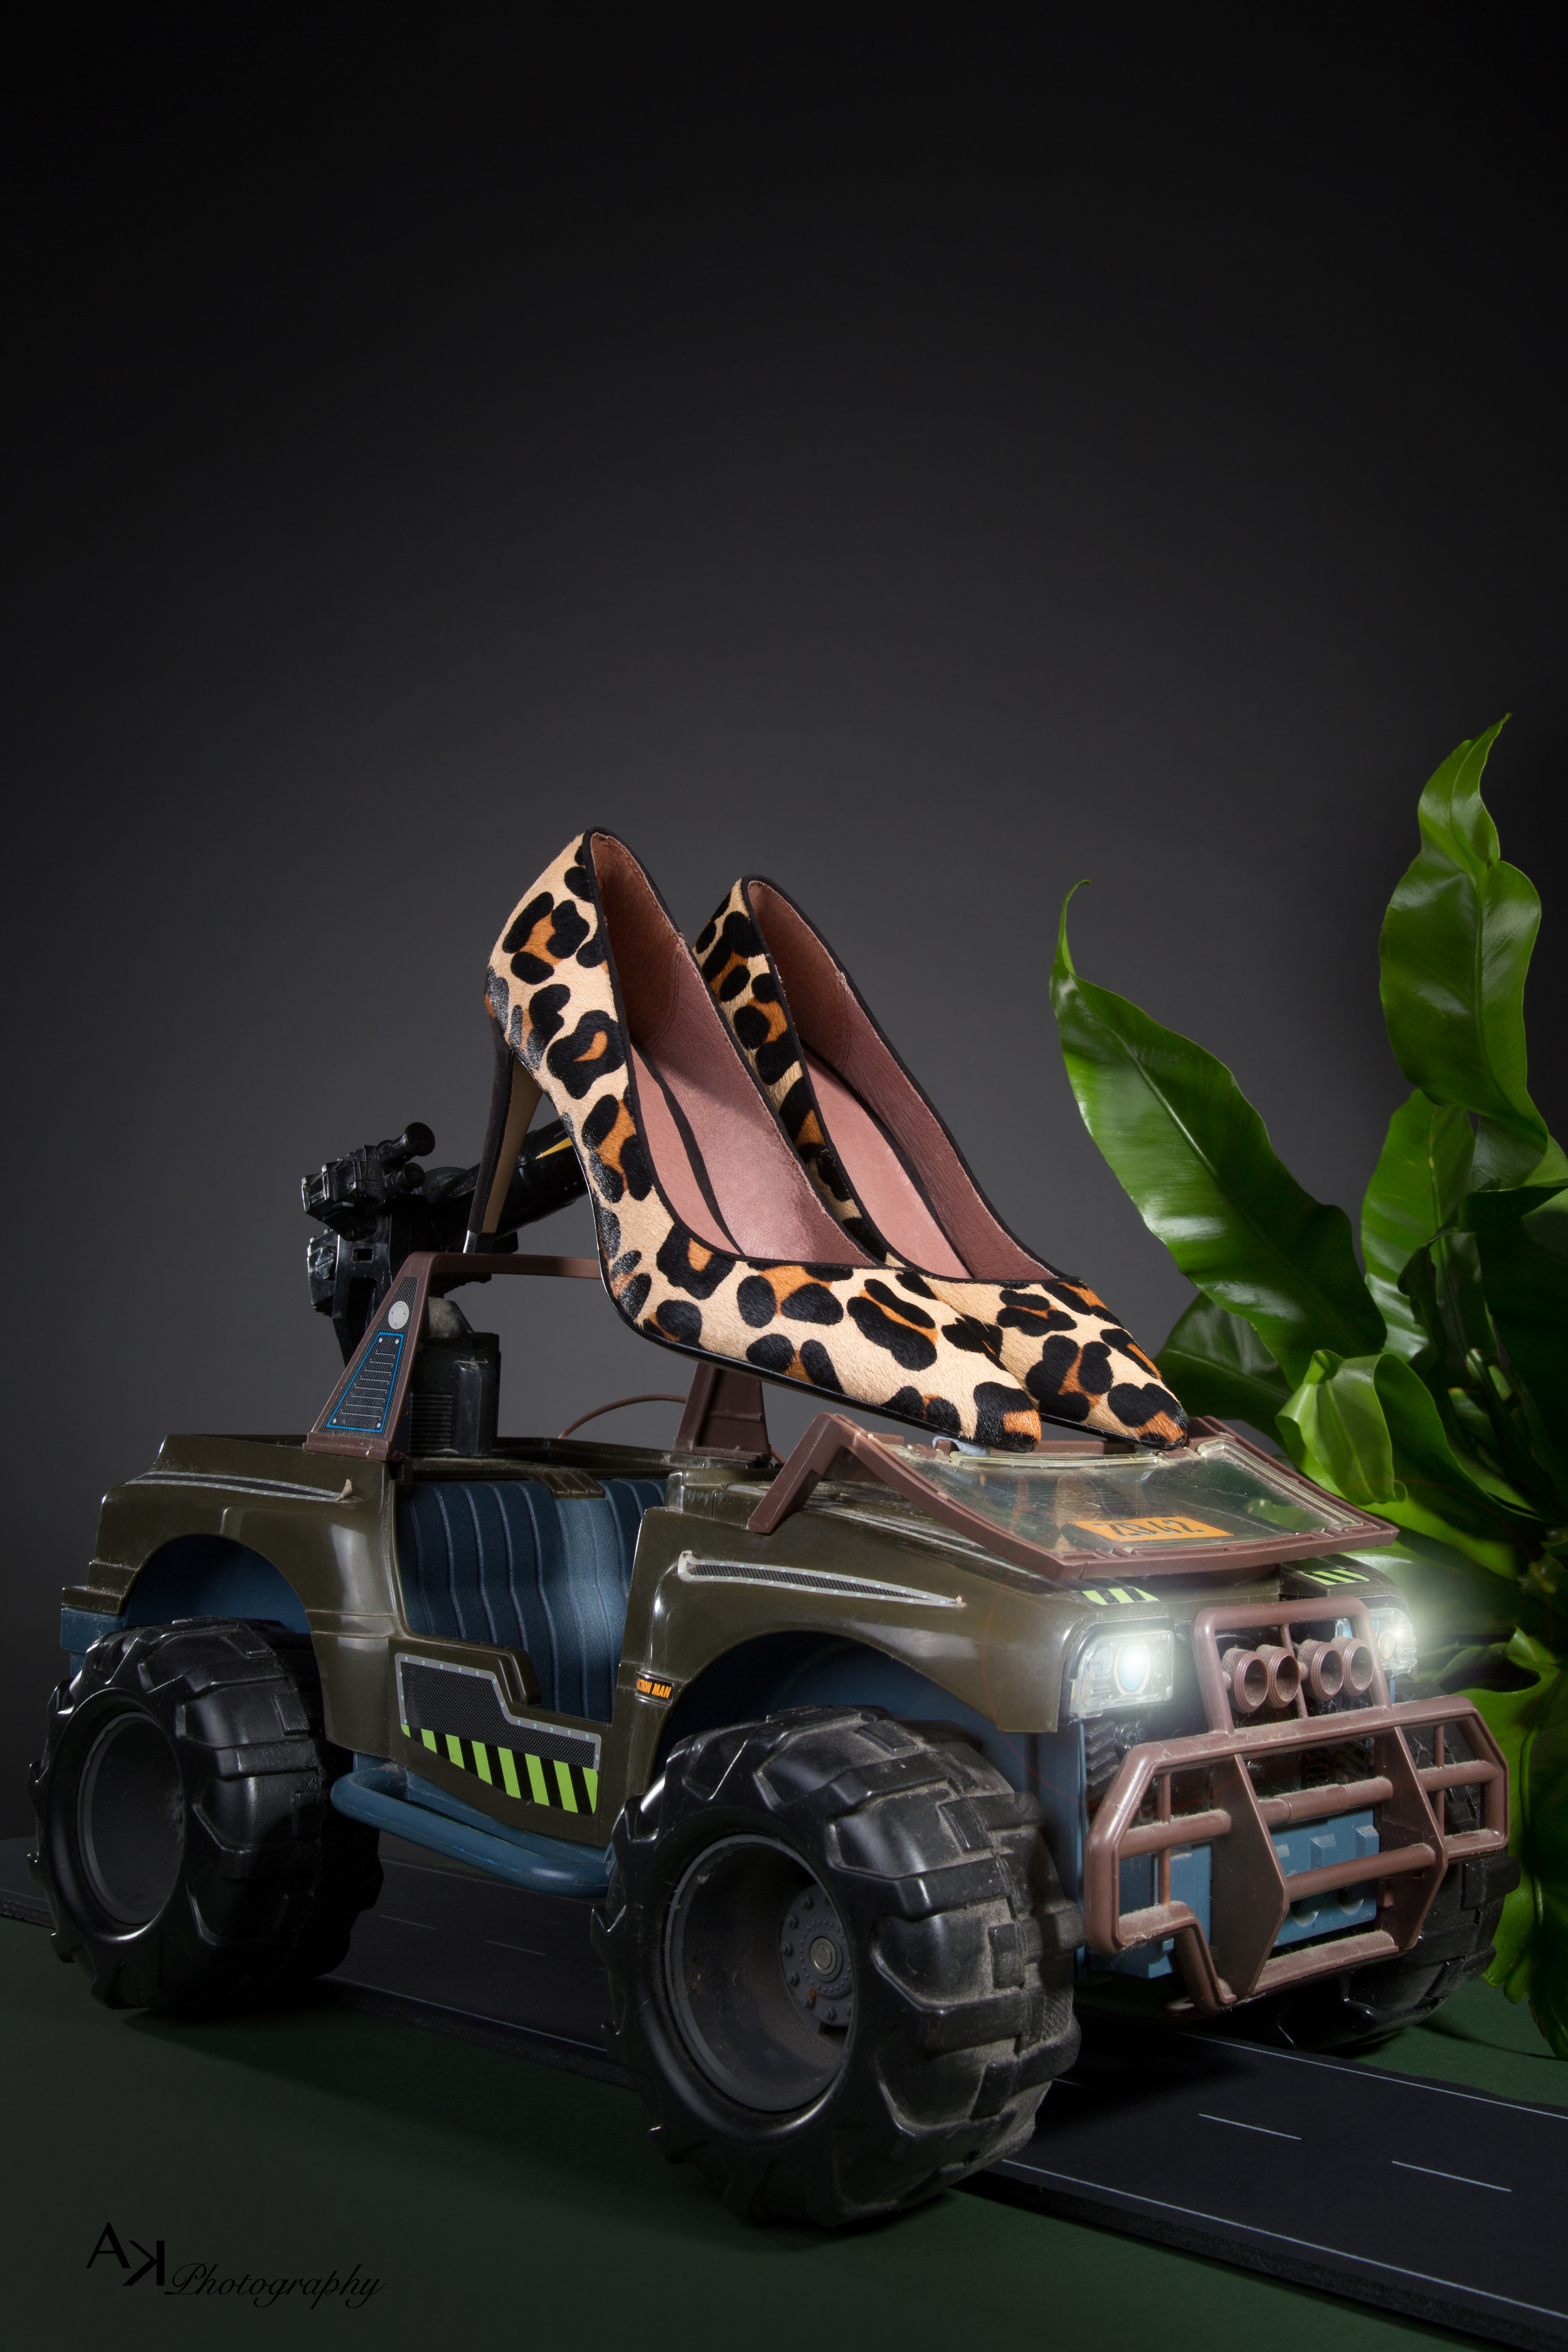  Luxury Shoe Campaign: "Take Me Where I'm Going" #2 Safari Style 